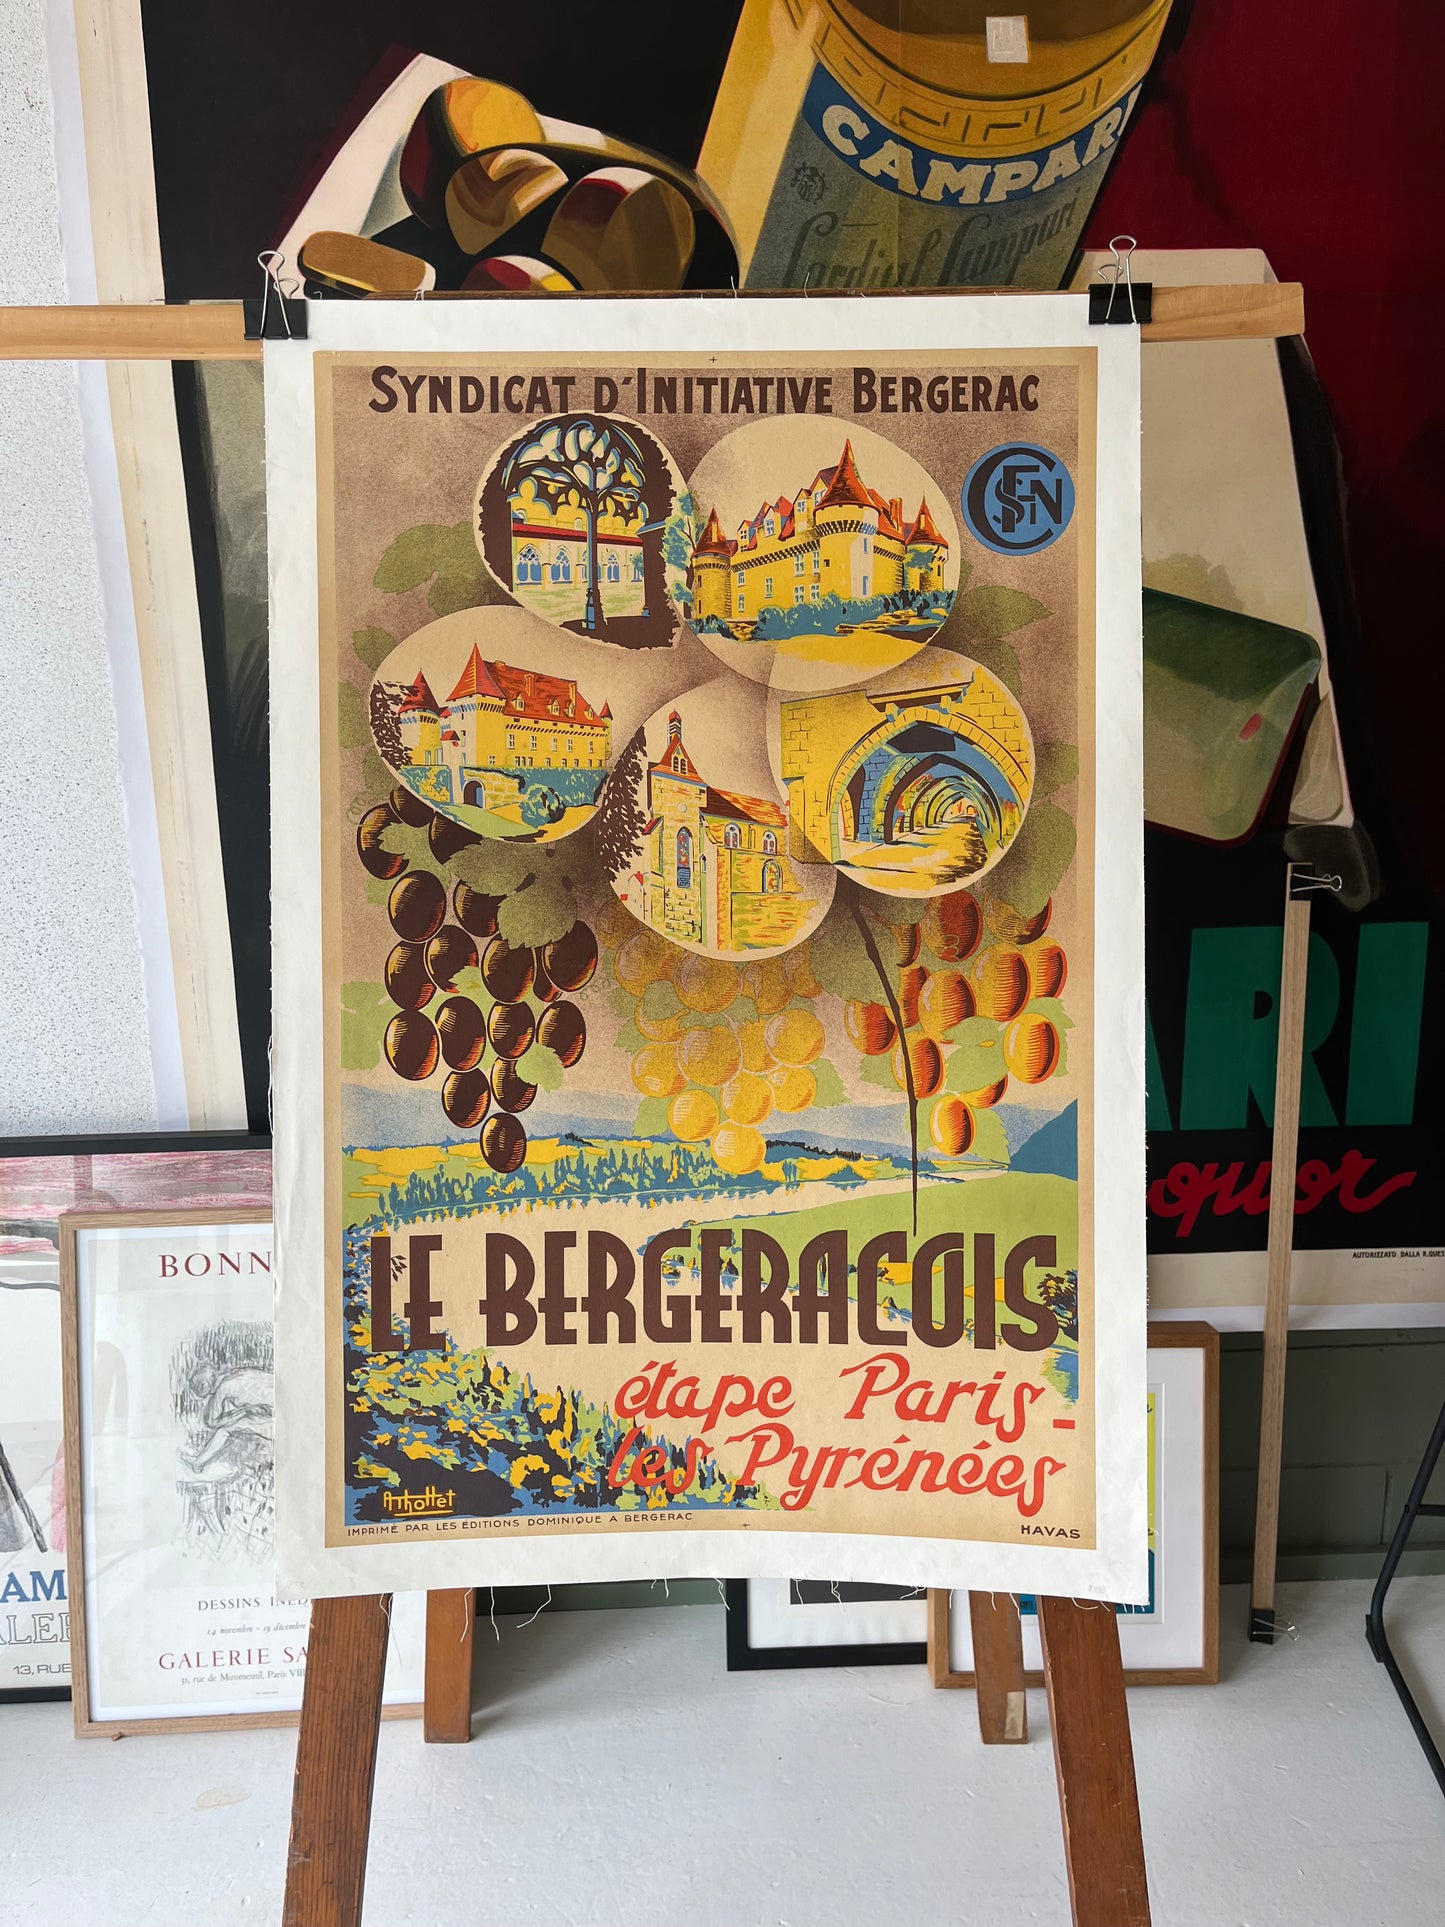 Le Bergeracois by Athottet